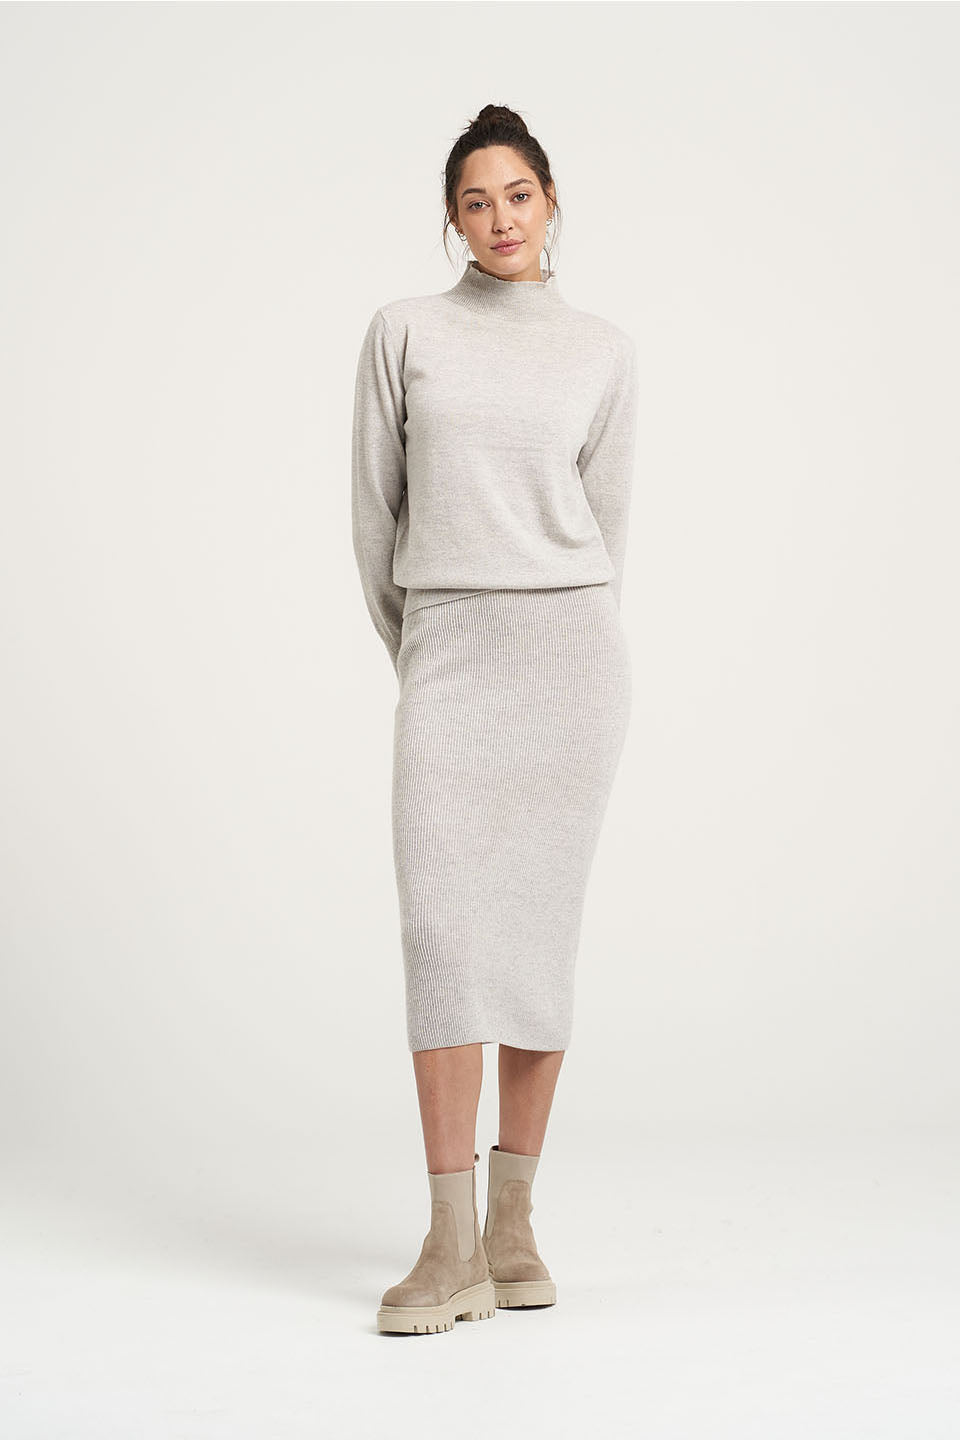 Cane Skirt - Pale Grey